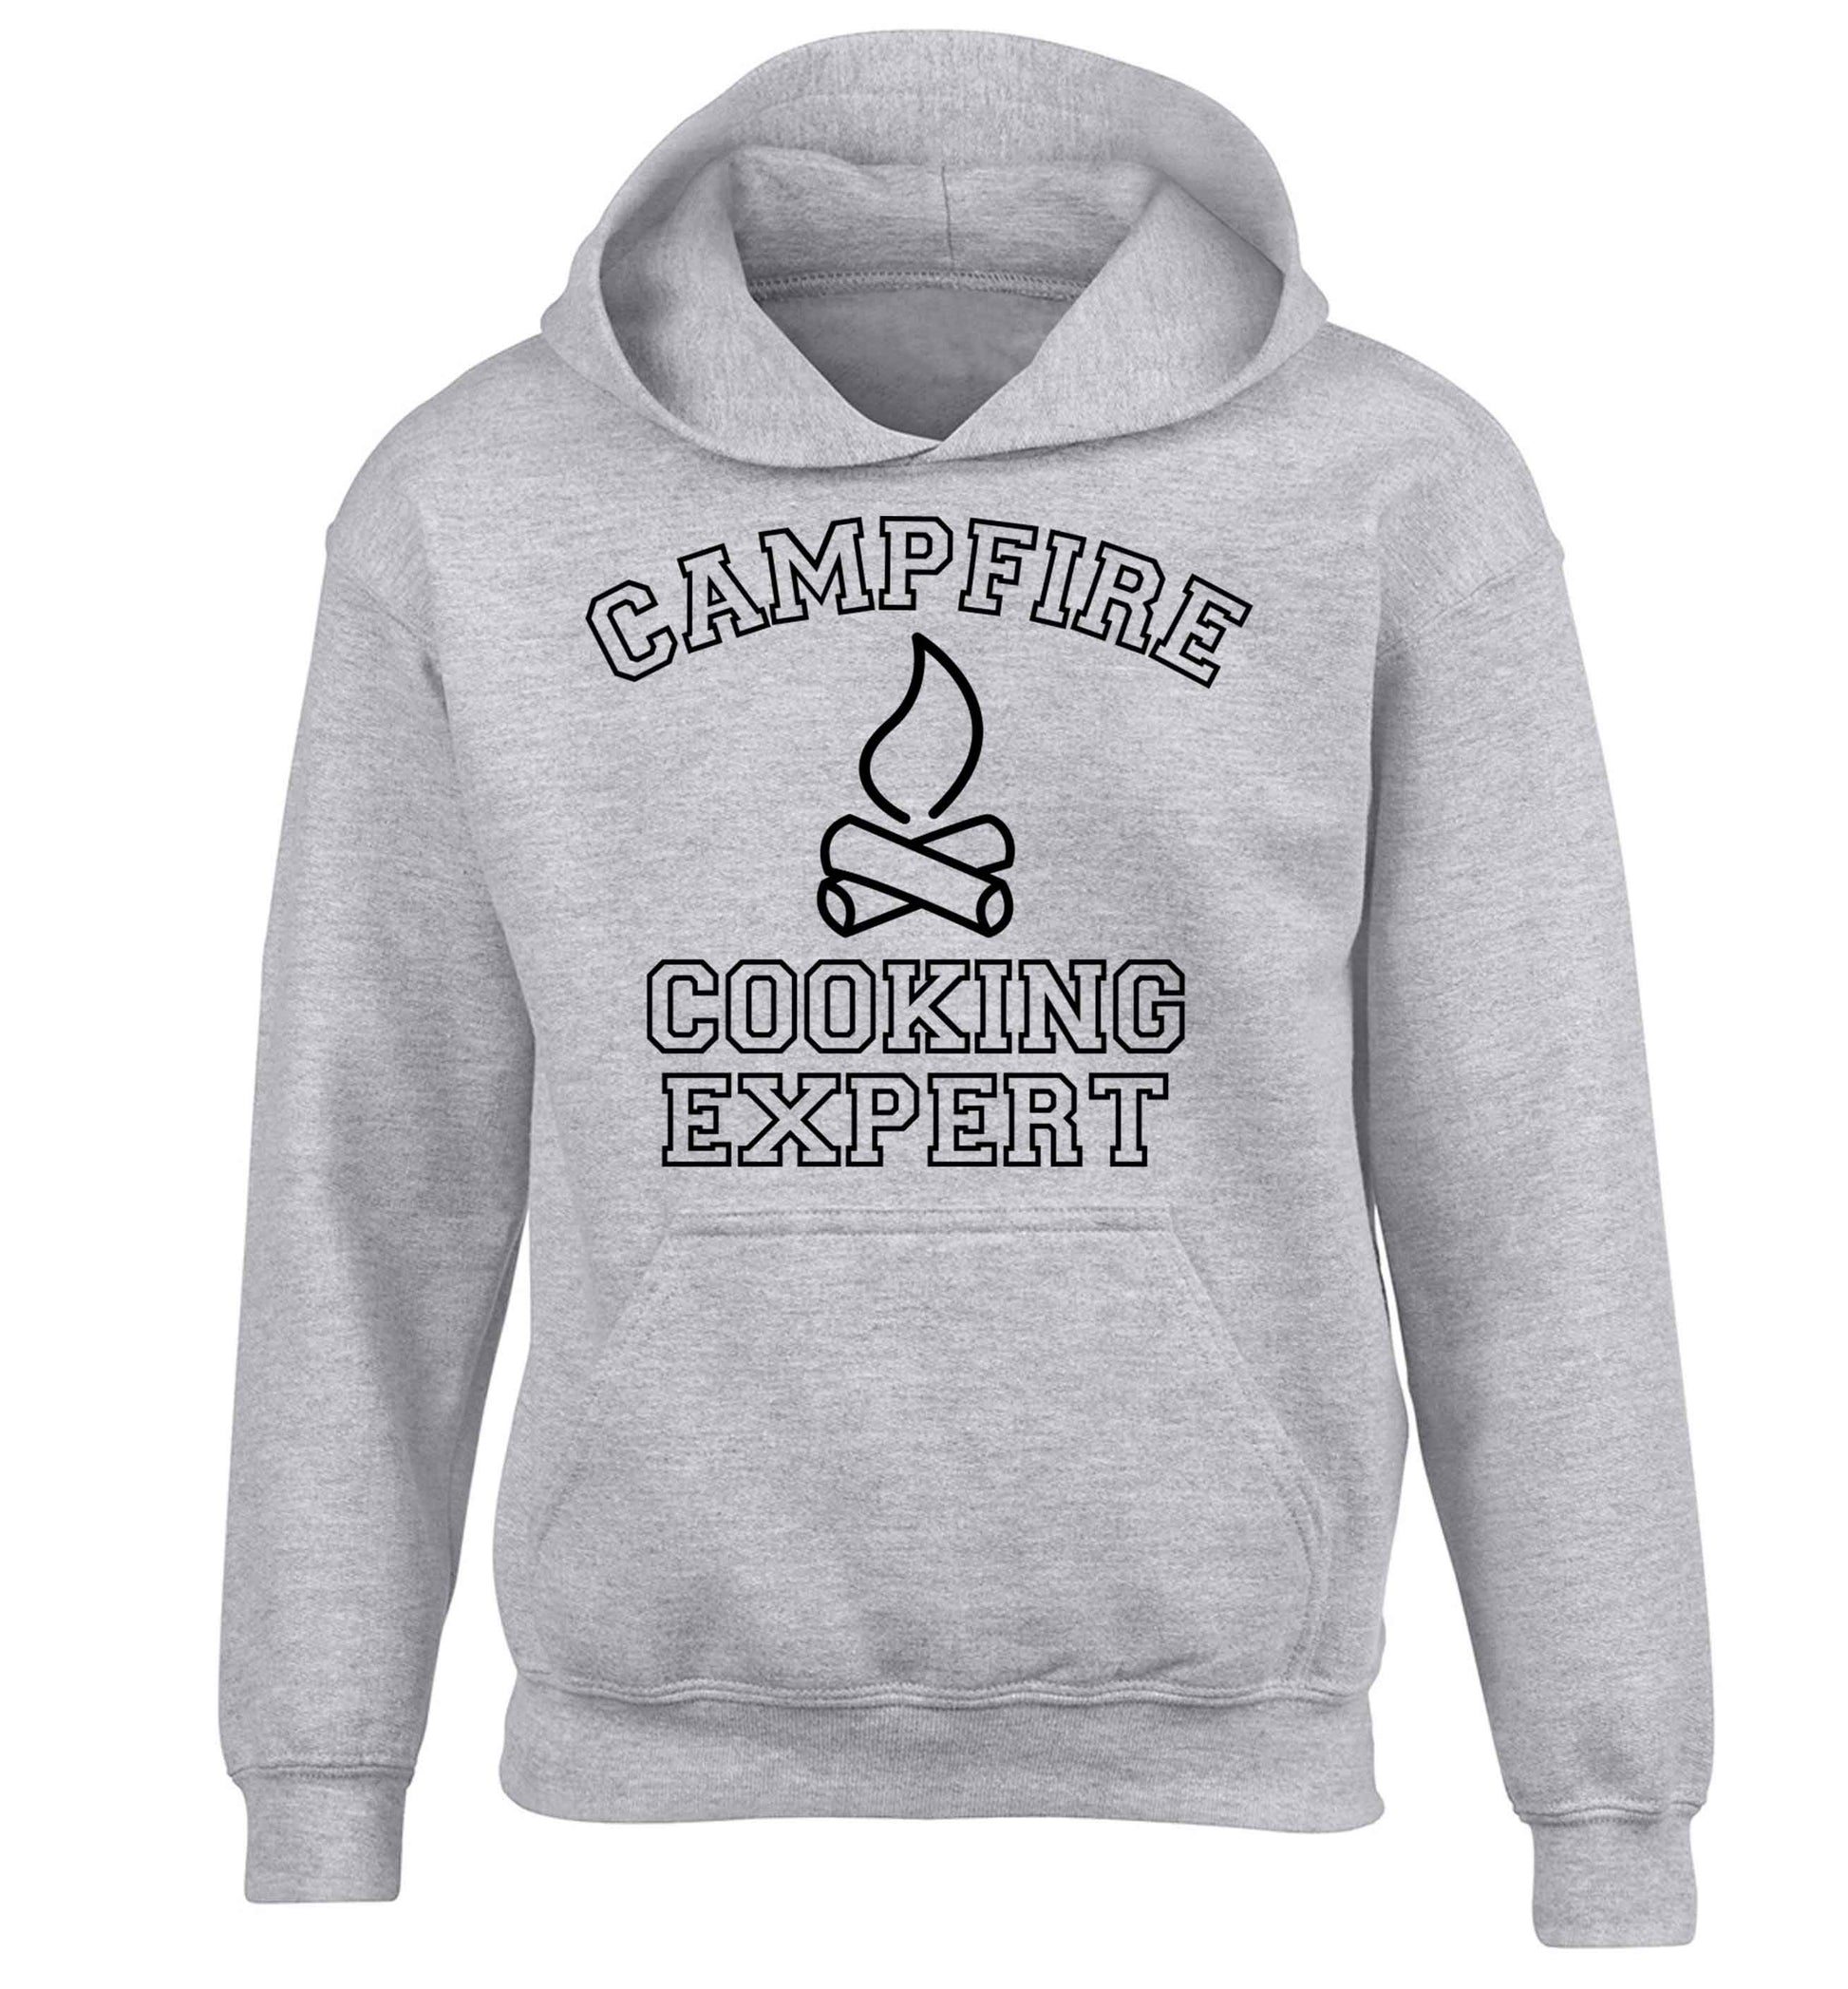 Campfire cooking expert children's grey hoodie 12-13 Years